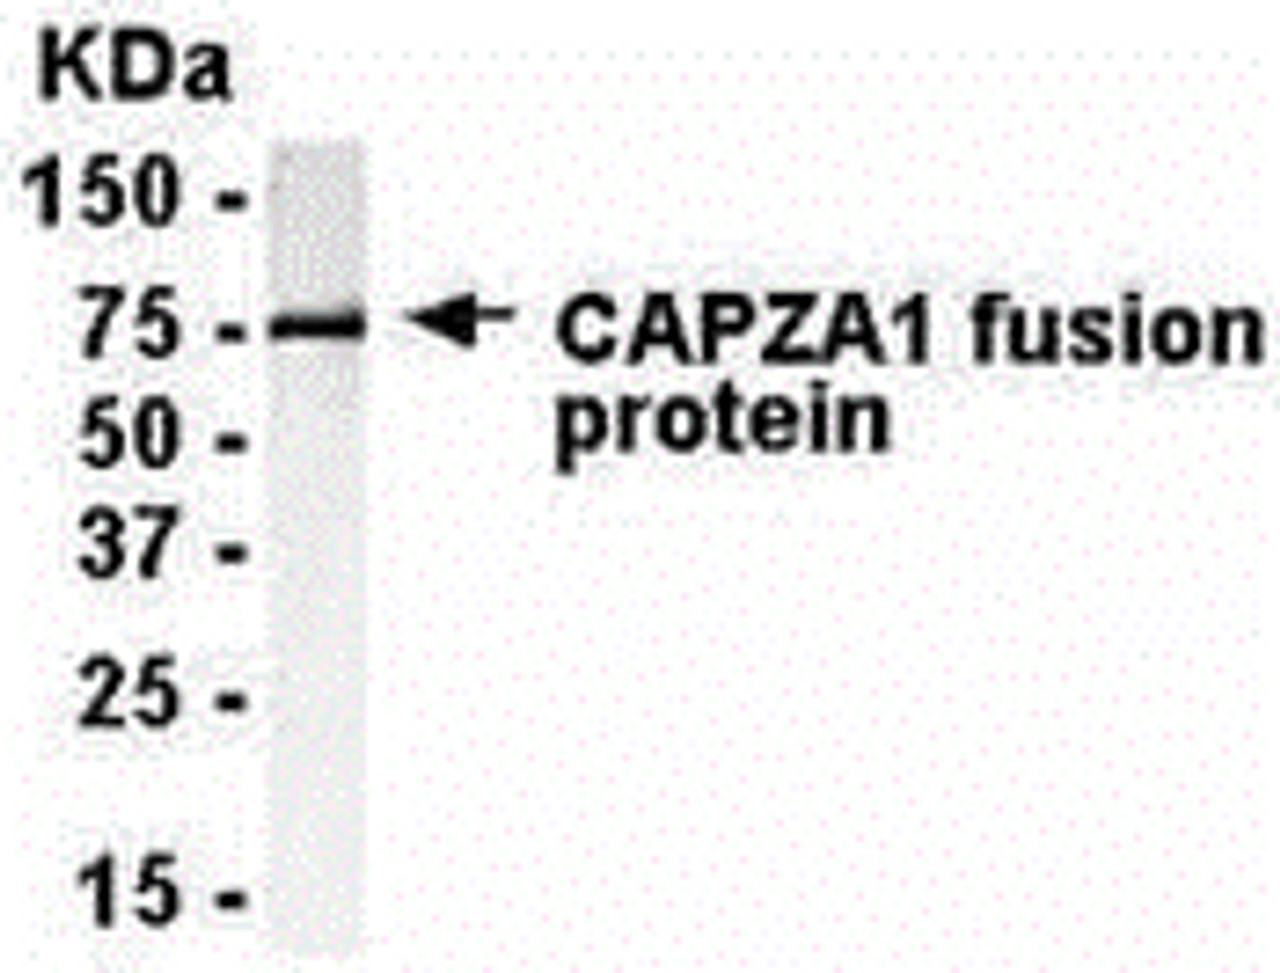 E coli-derived fusion protein as test antigen. anti-CAPZA1 IgY dilution: 1:2000, Goat anti-IgY-HRP dilution: 1:1000. Colorimetric method for signal development.